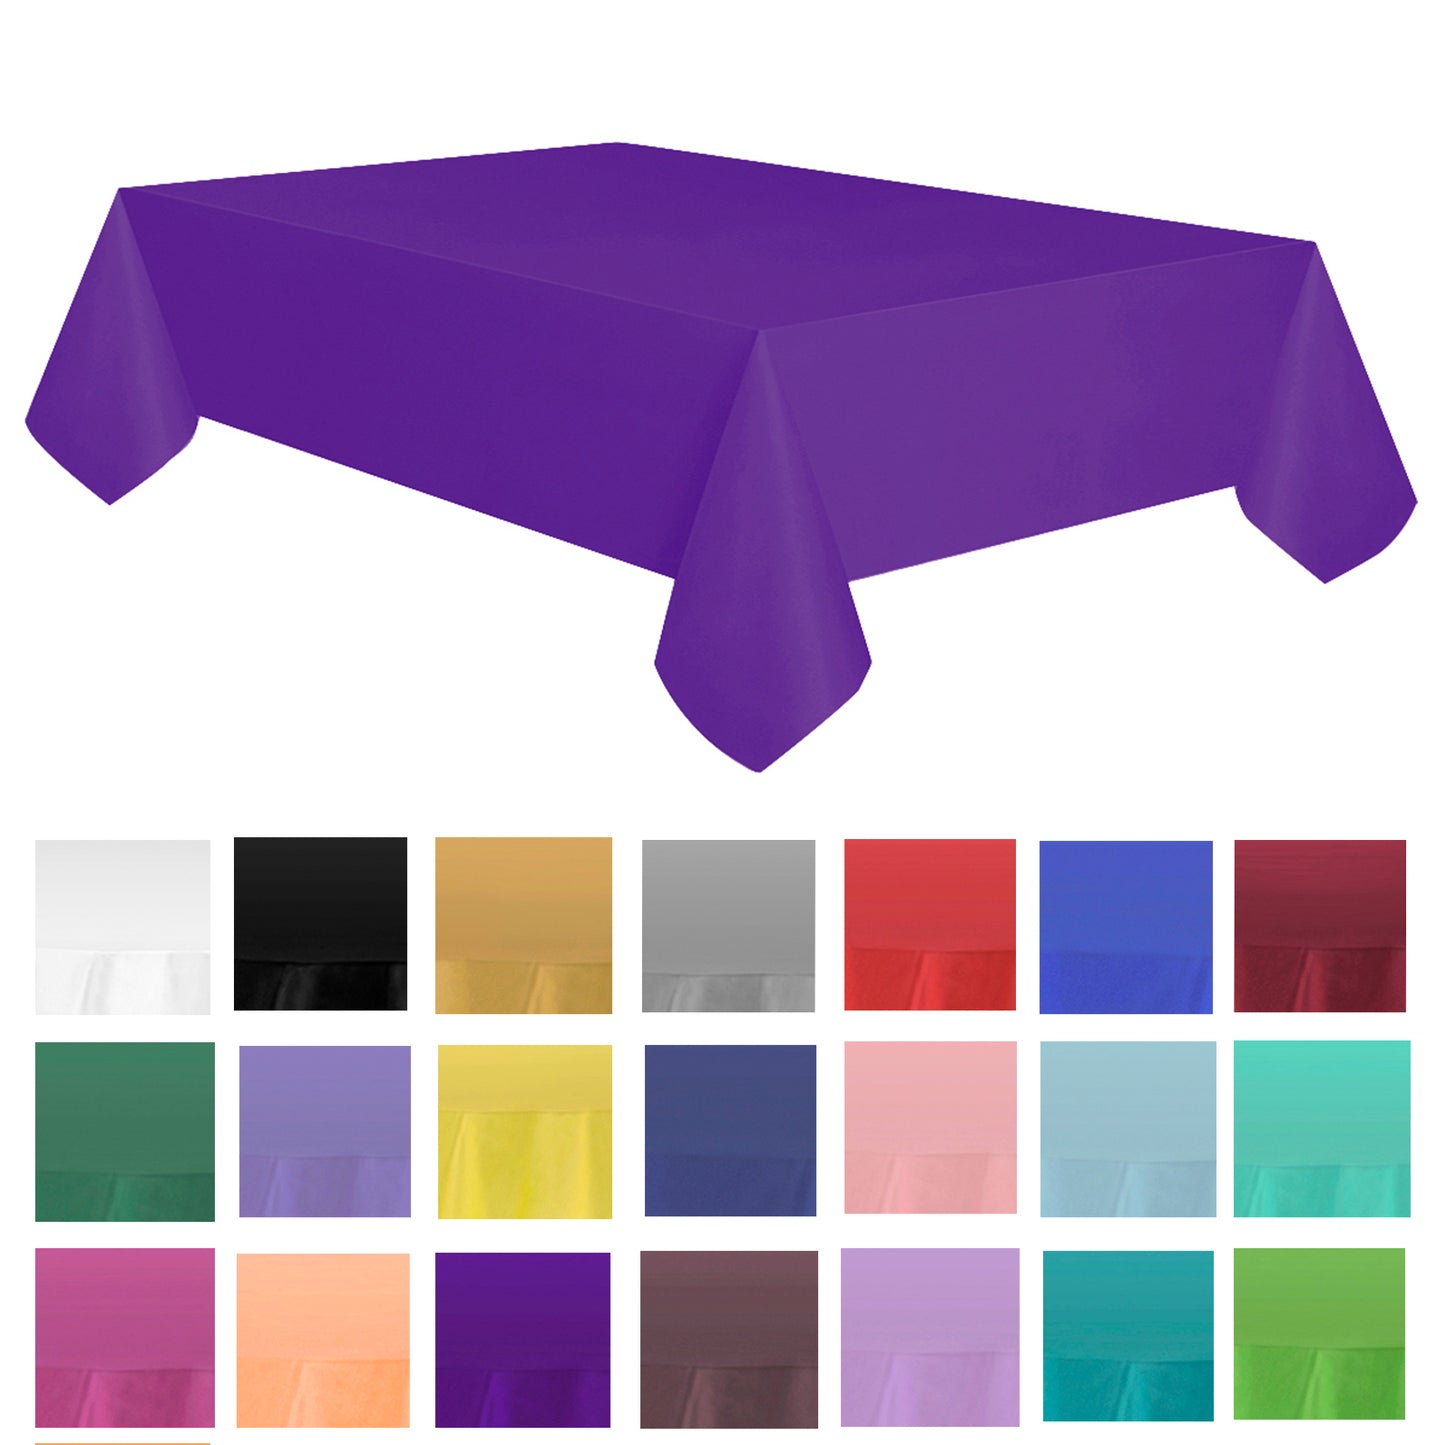 Allgala Table Cover 6-PK Premium Medium Duty Disposable 54"x108" Rectangle Plastic Tablecloth